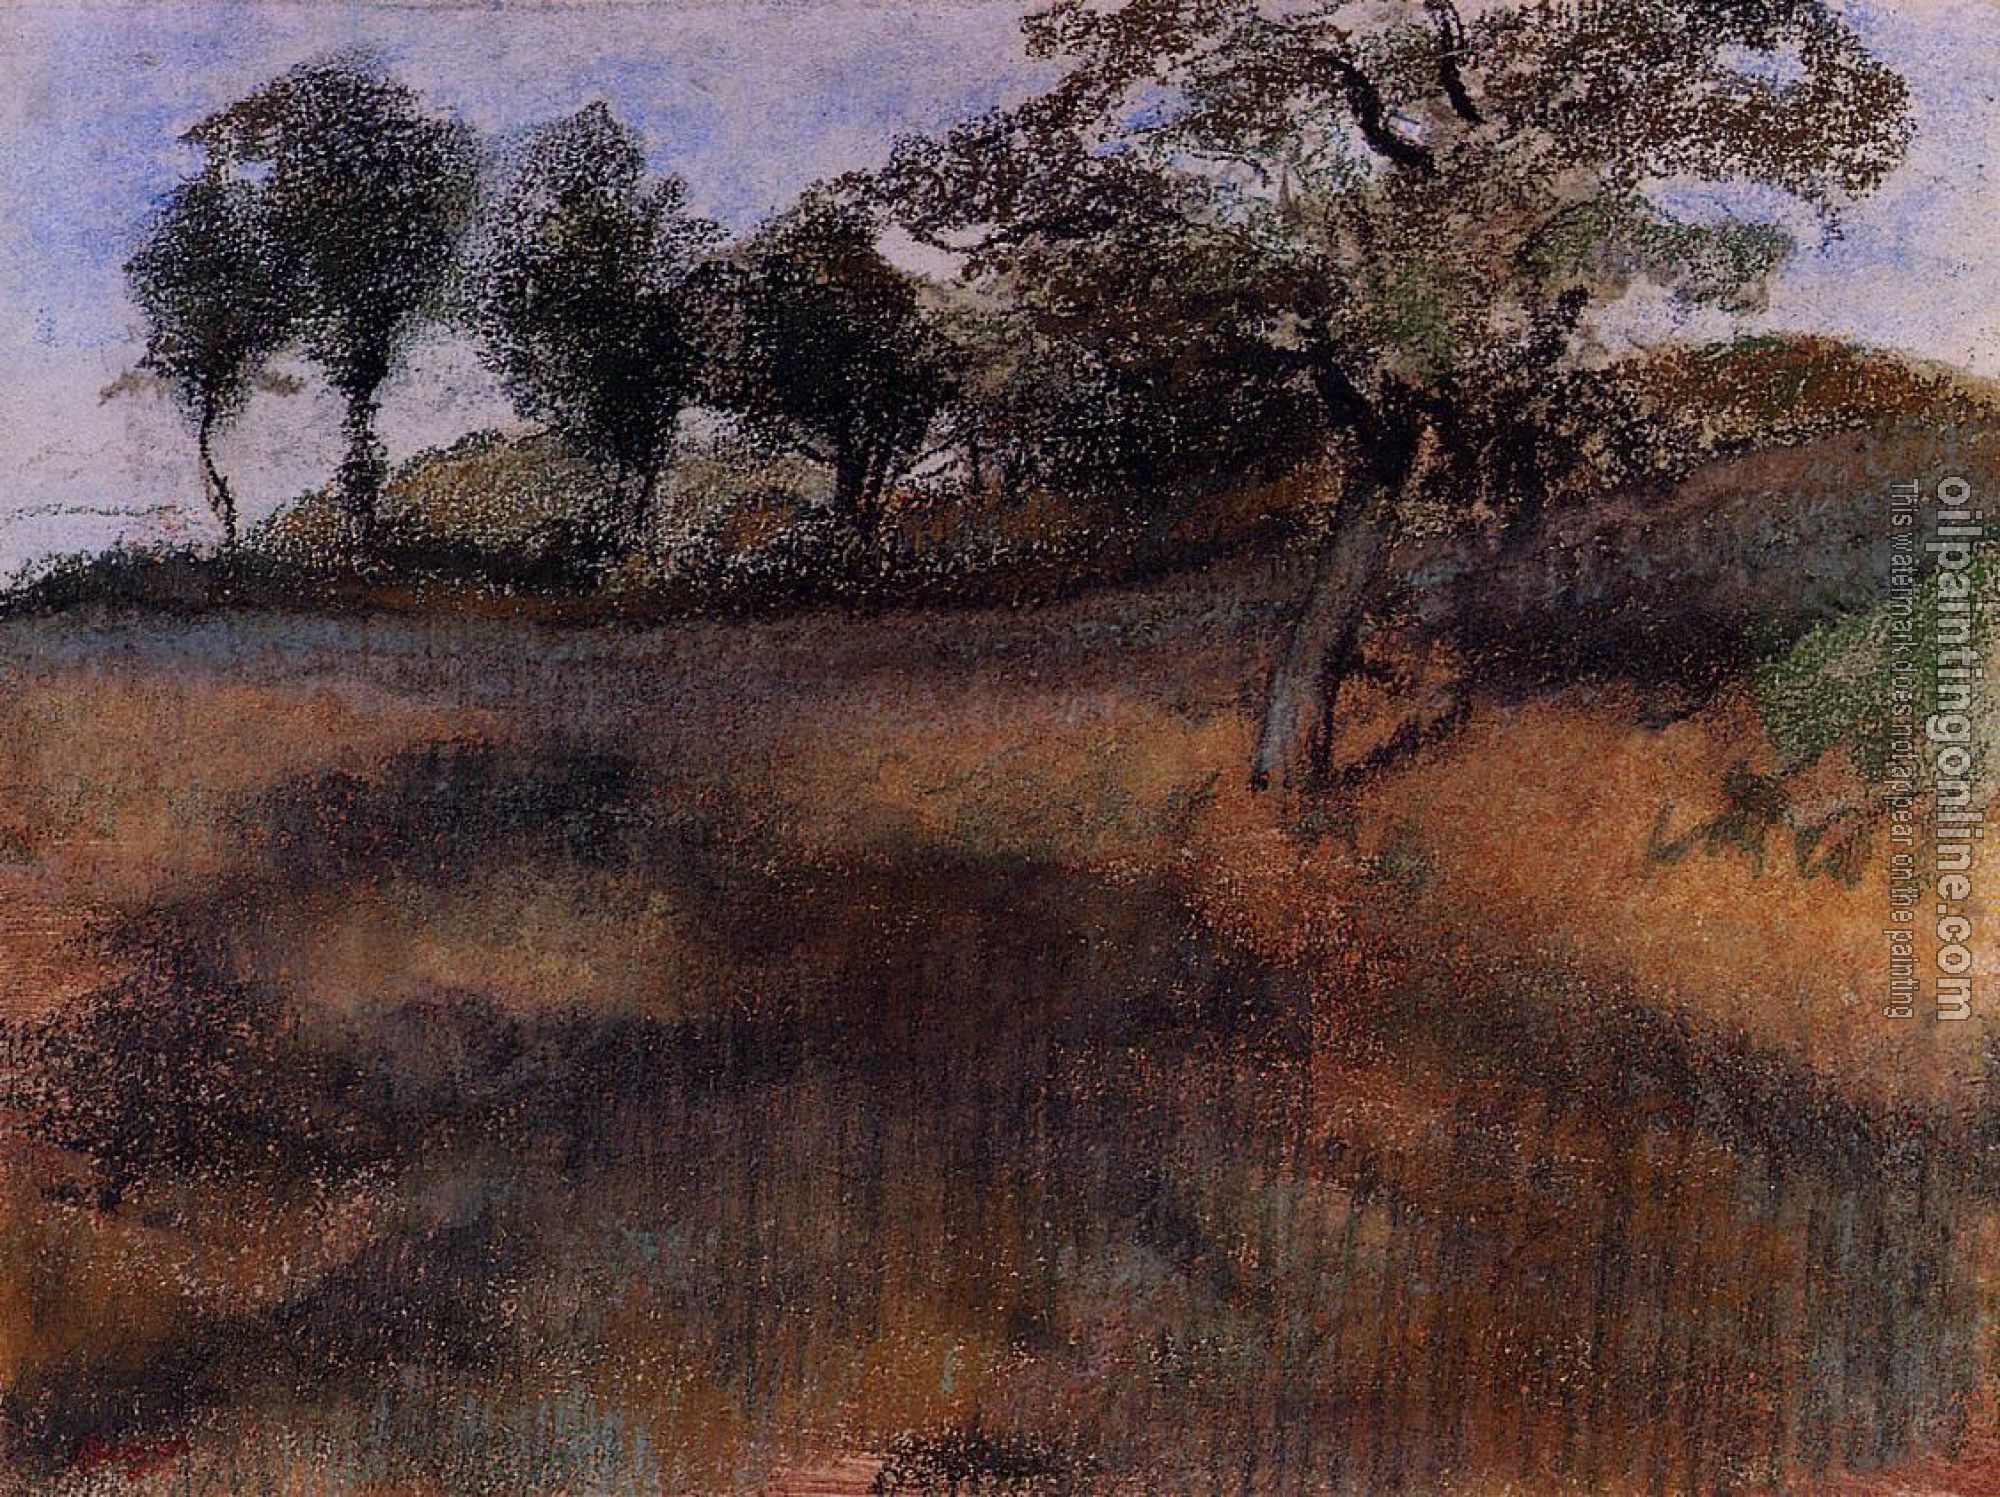 Degas, Edgar - Plowed Field